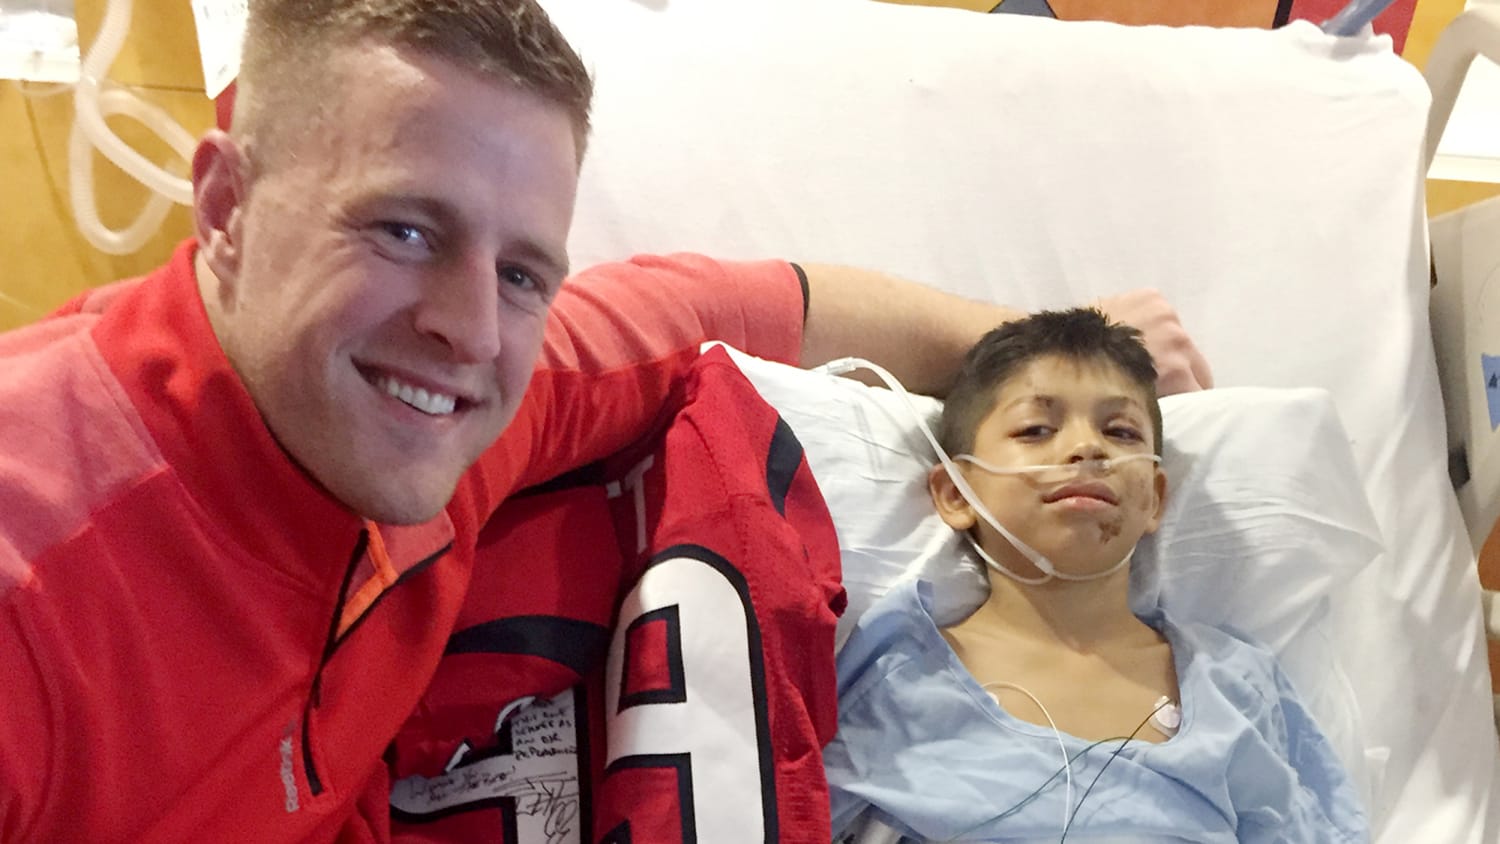 Texans' J.J. Watt delivers football jerseys to injured boy in hospital - TODAY.com2500 x 1407